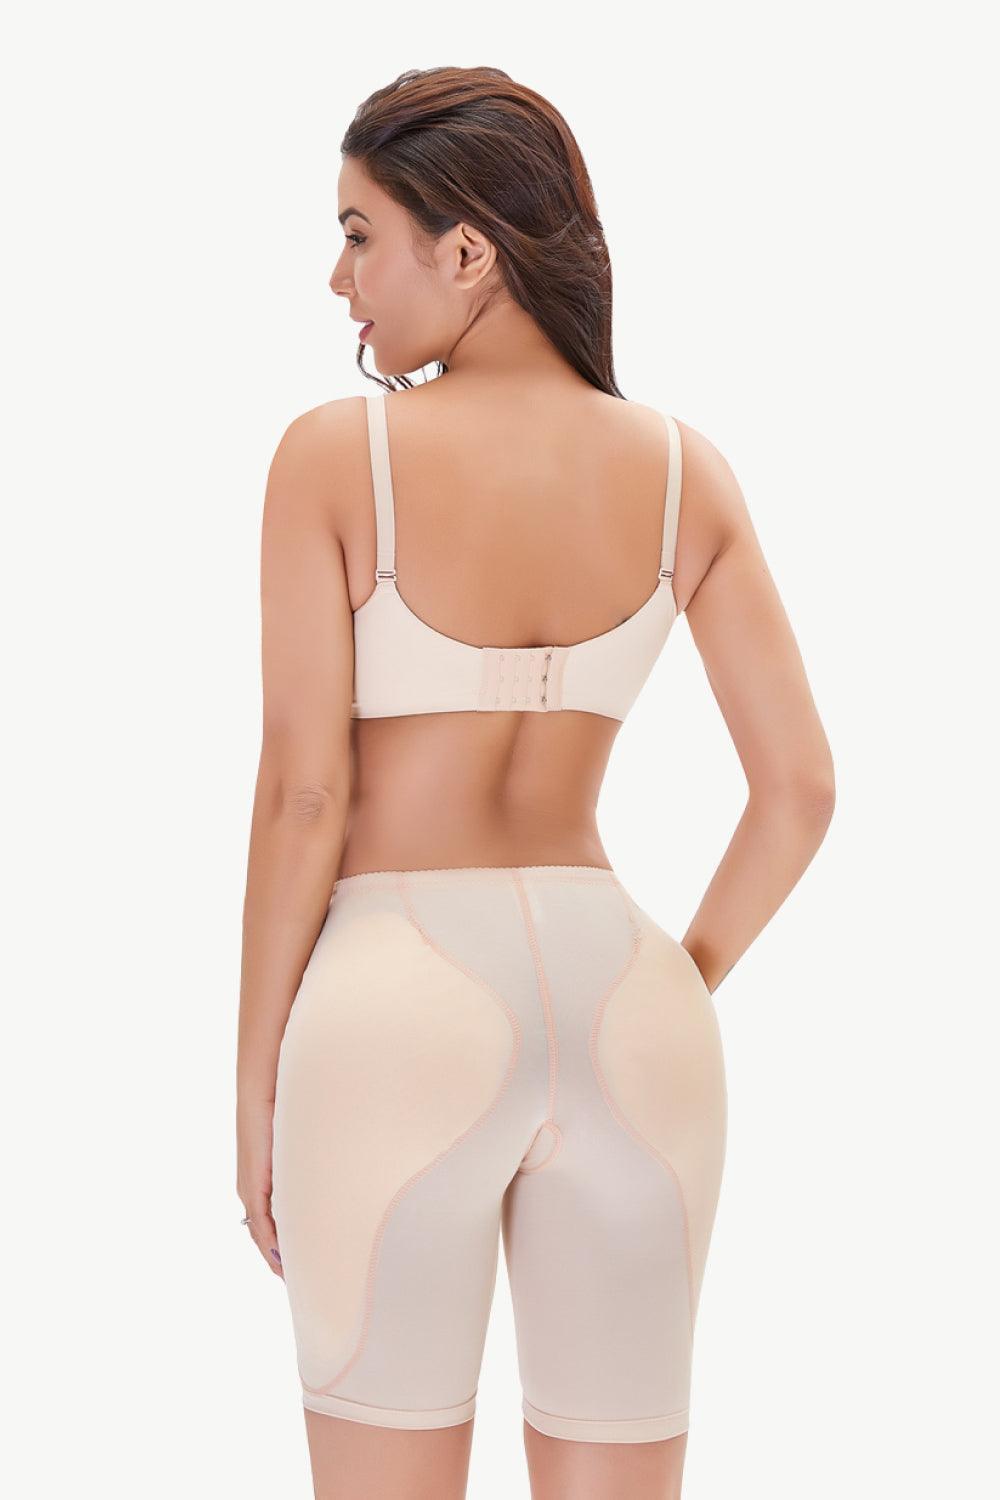 Butt Lifter Hip Enhancer Body Shaping Shorts - MXSTUDIO.COM